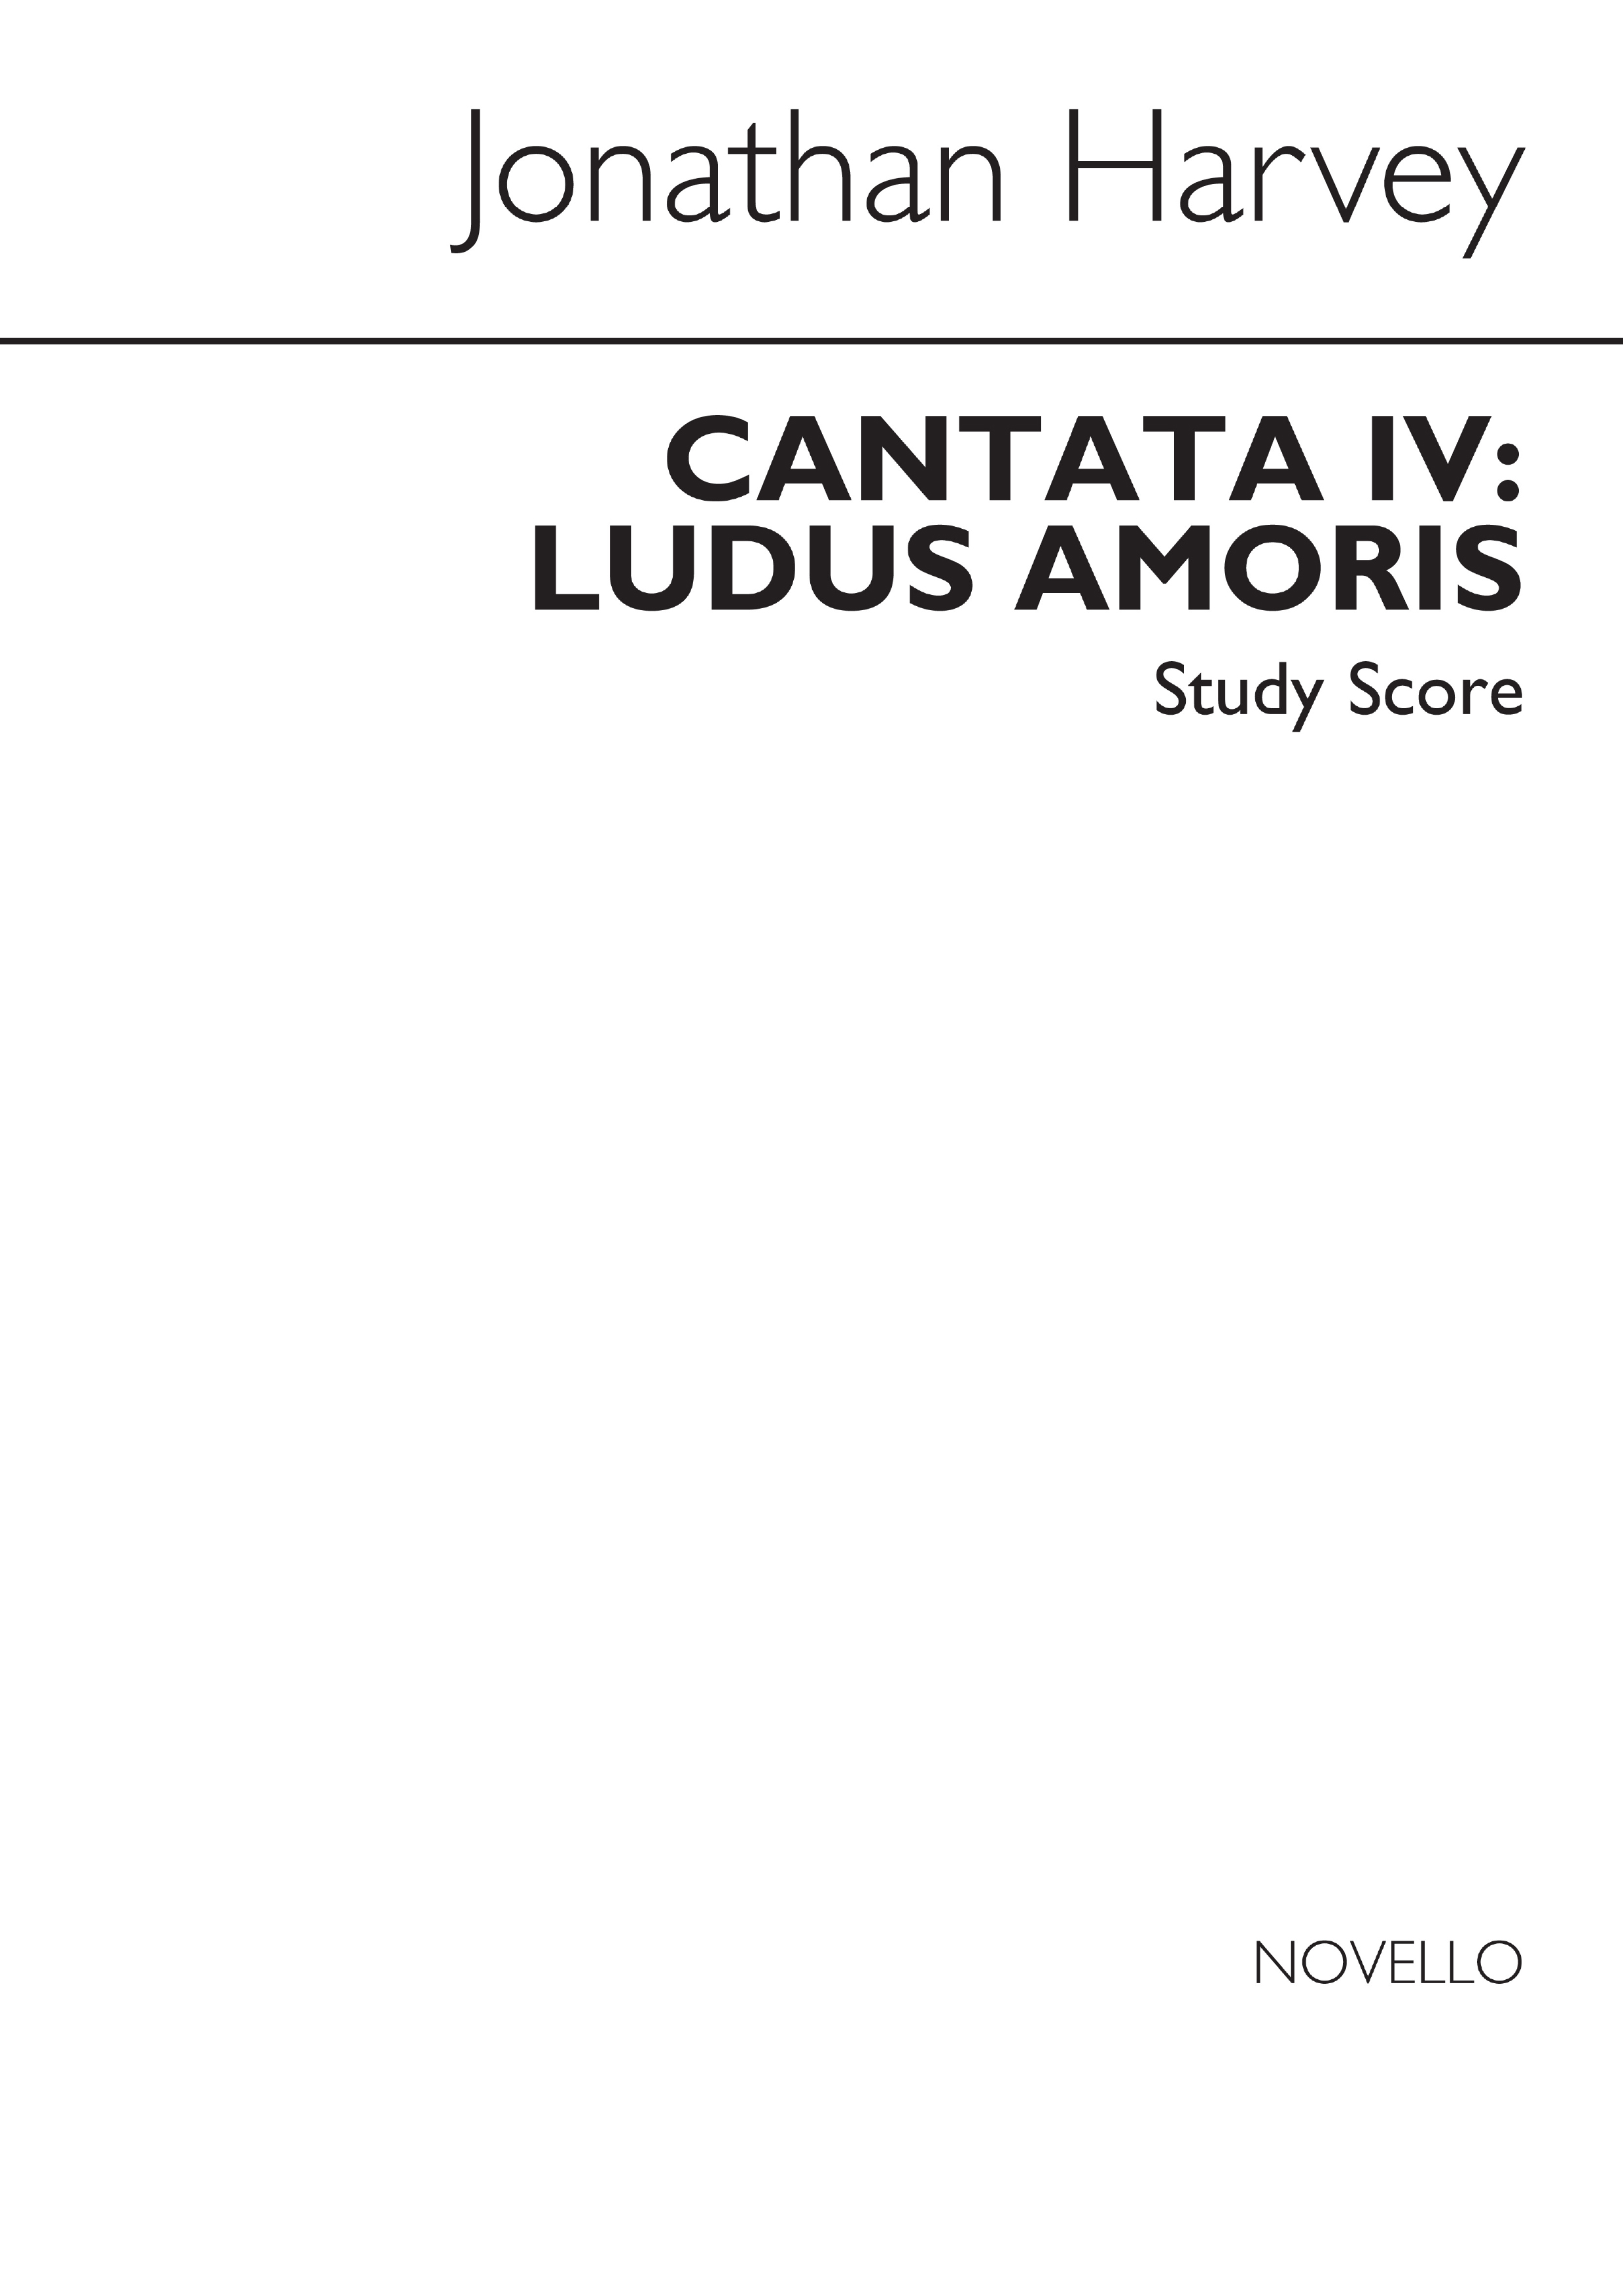 Jonathan Harvey: Ludus Amoris Cantata IV (Study Score)